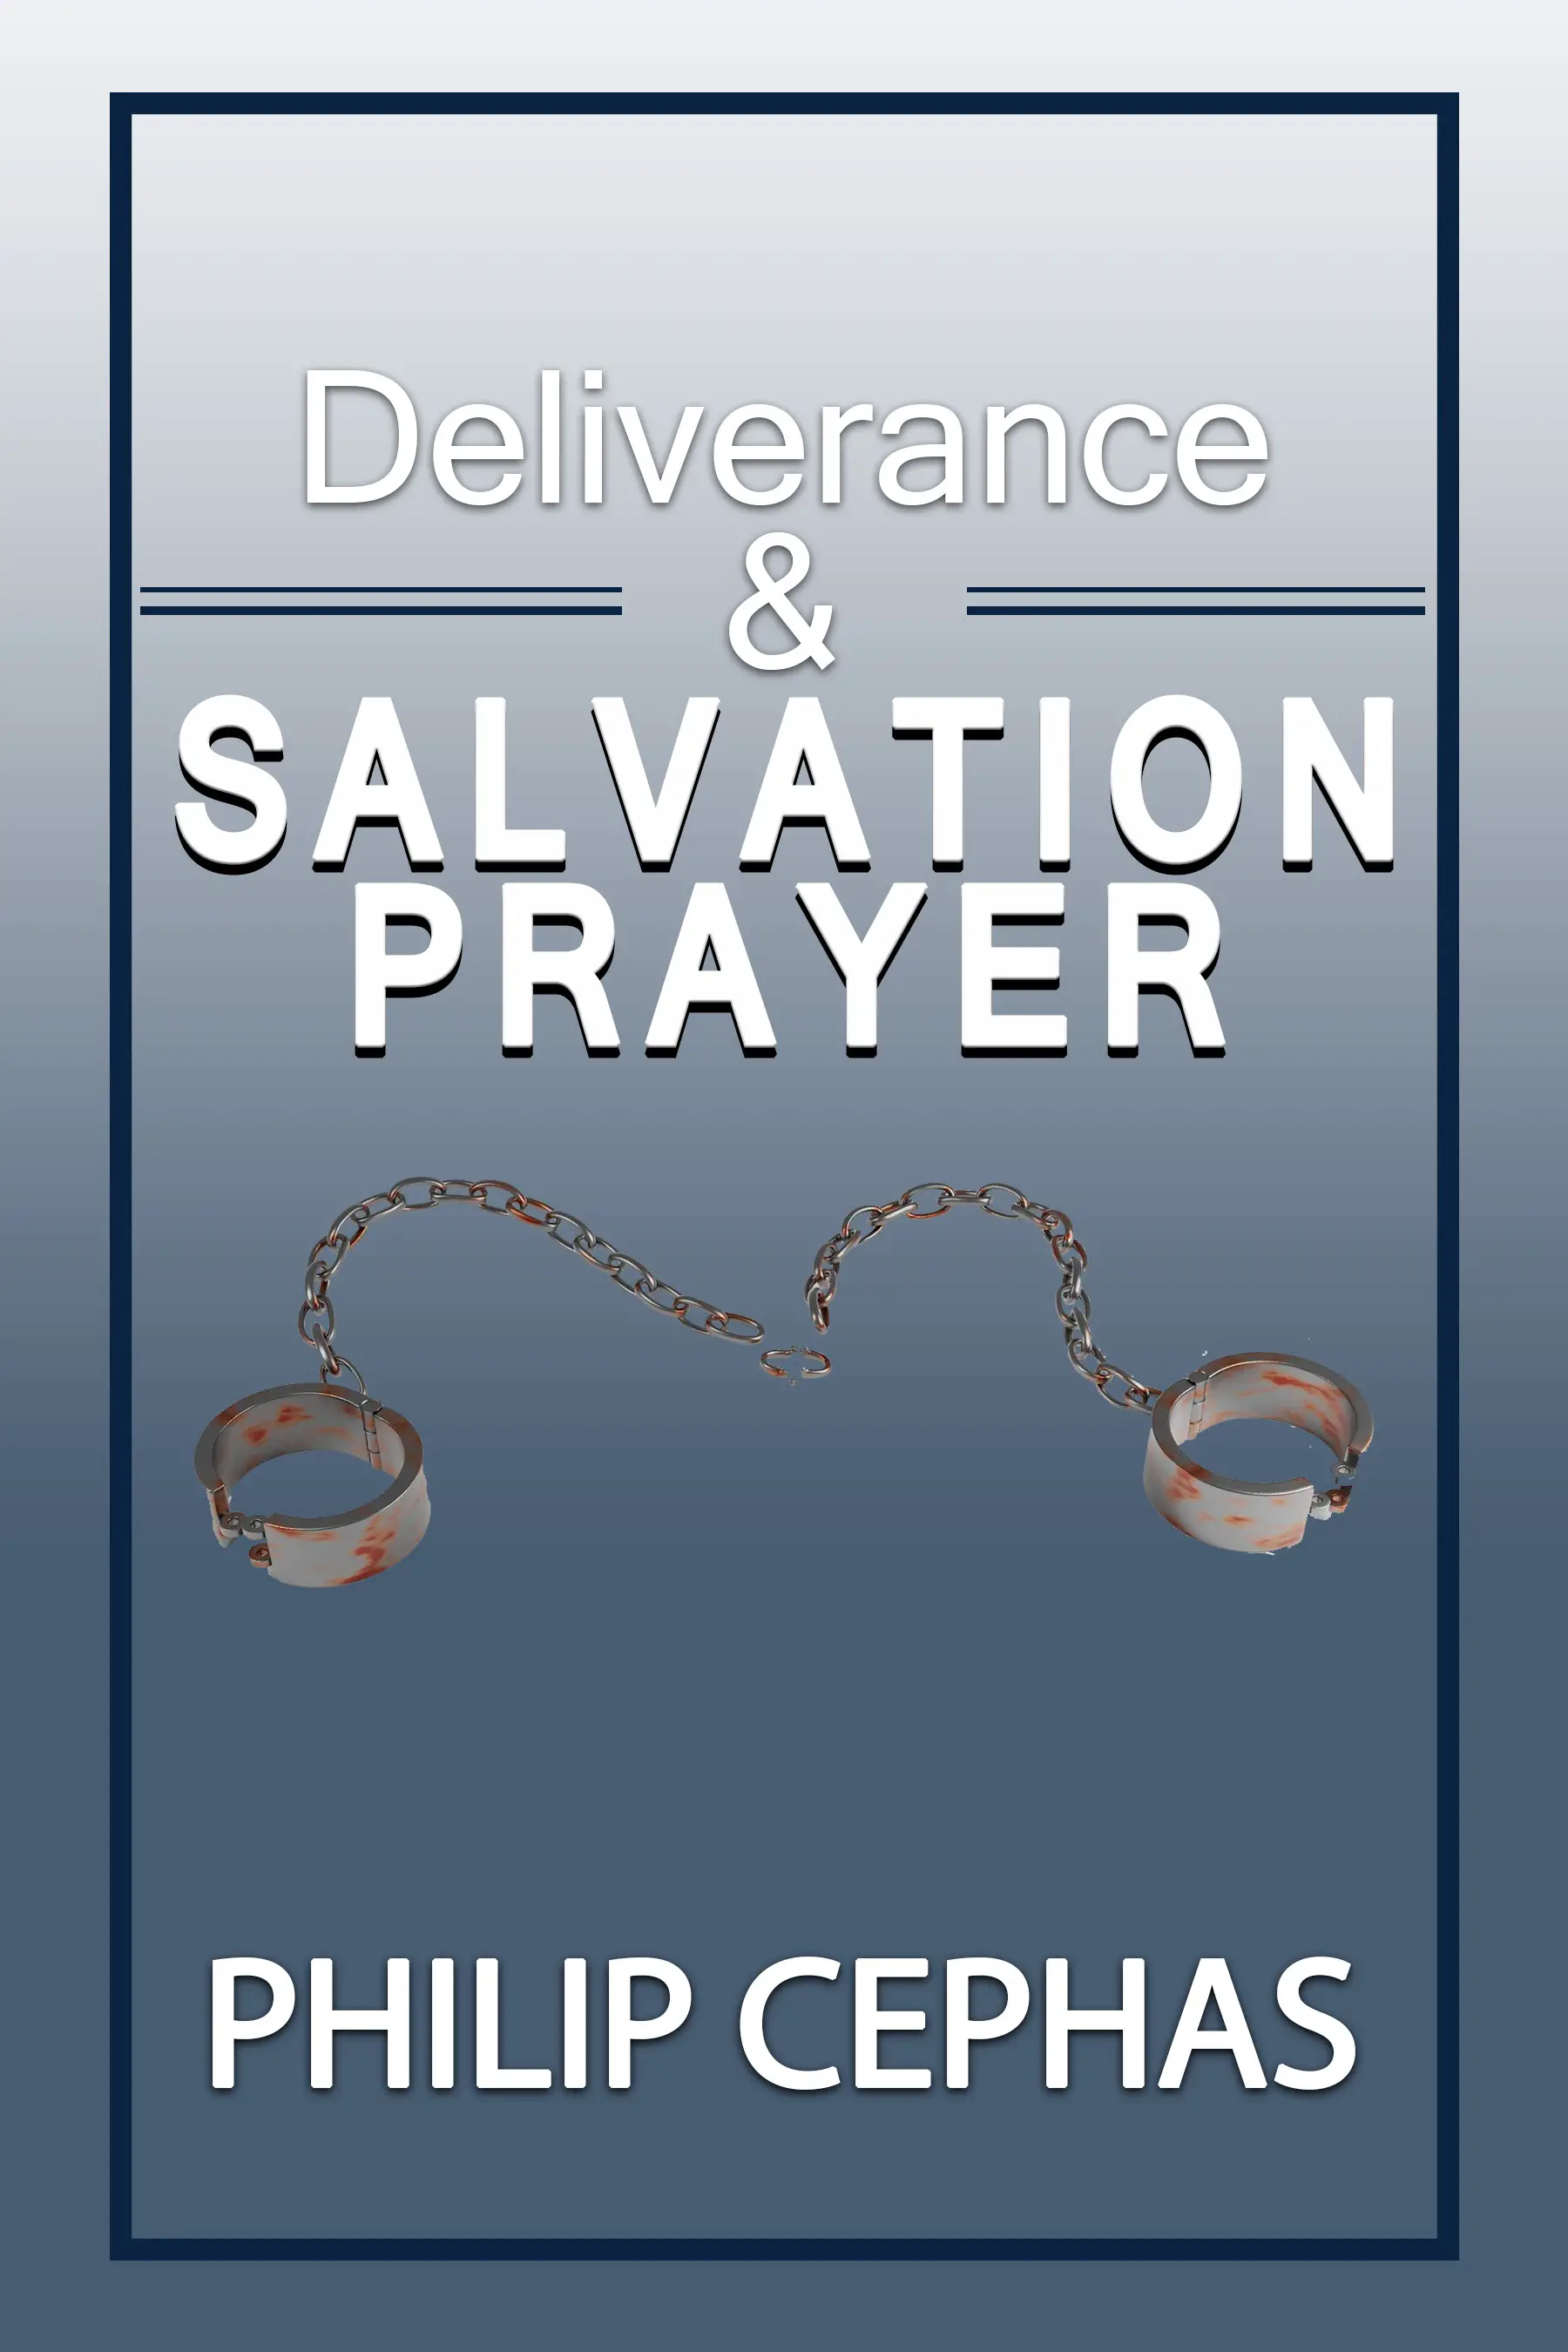 DOWNLOAD PDF: Deliverance & Salvation Prayer by Apostle Philip Cephas 19